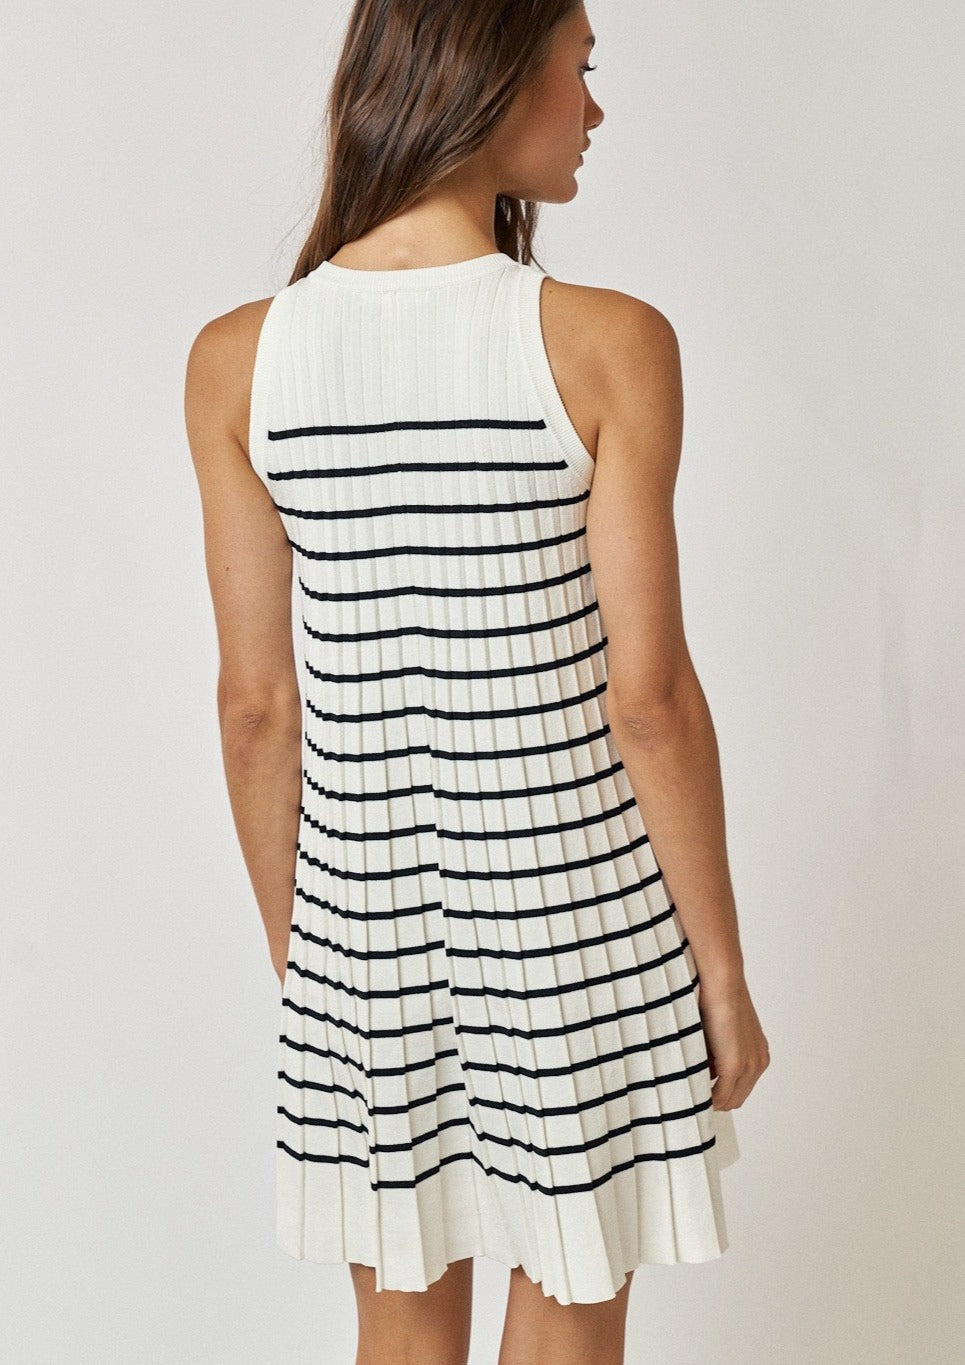 Regatta White Knit Striped Dress